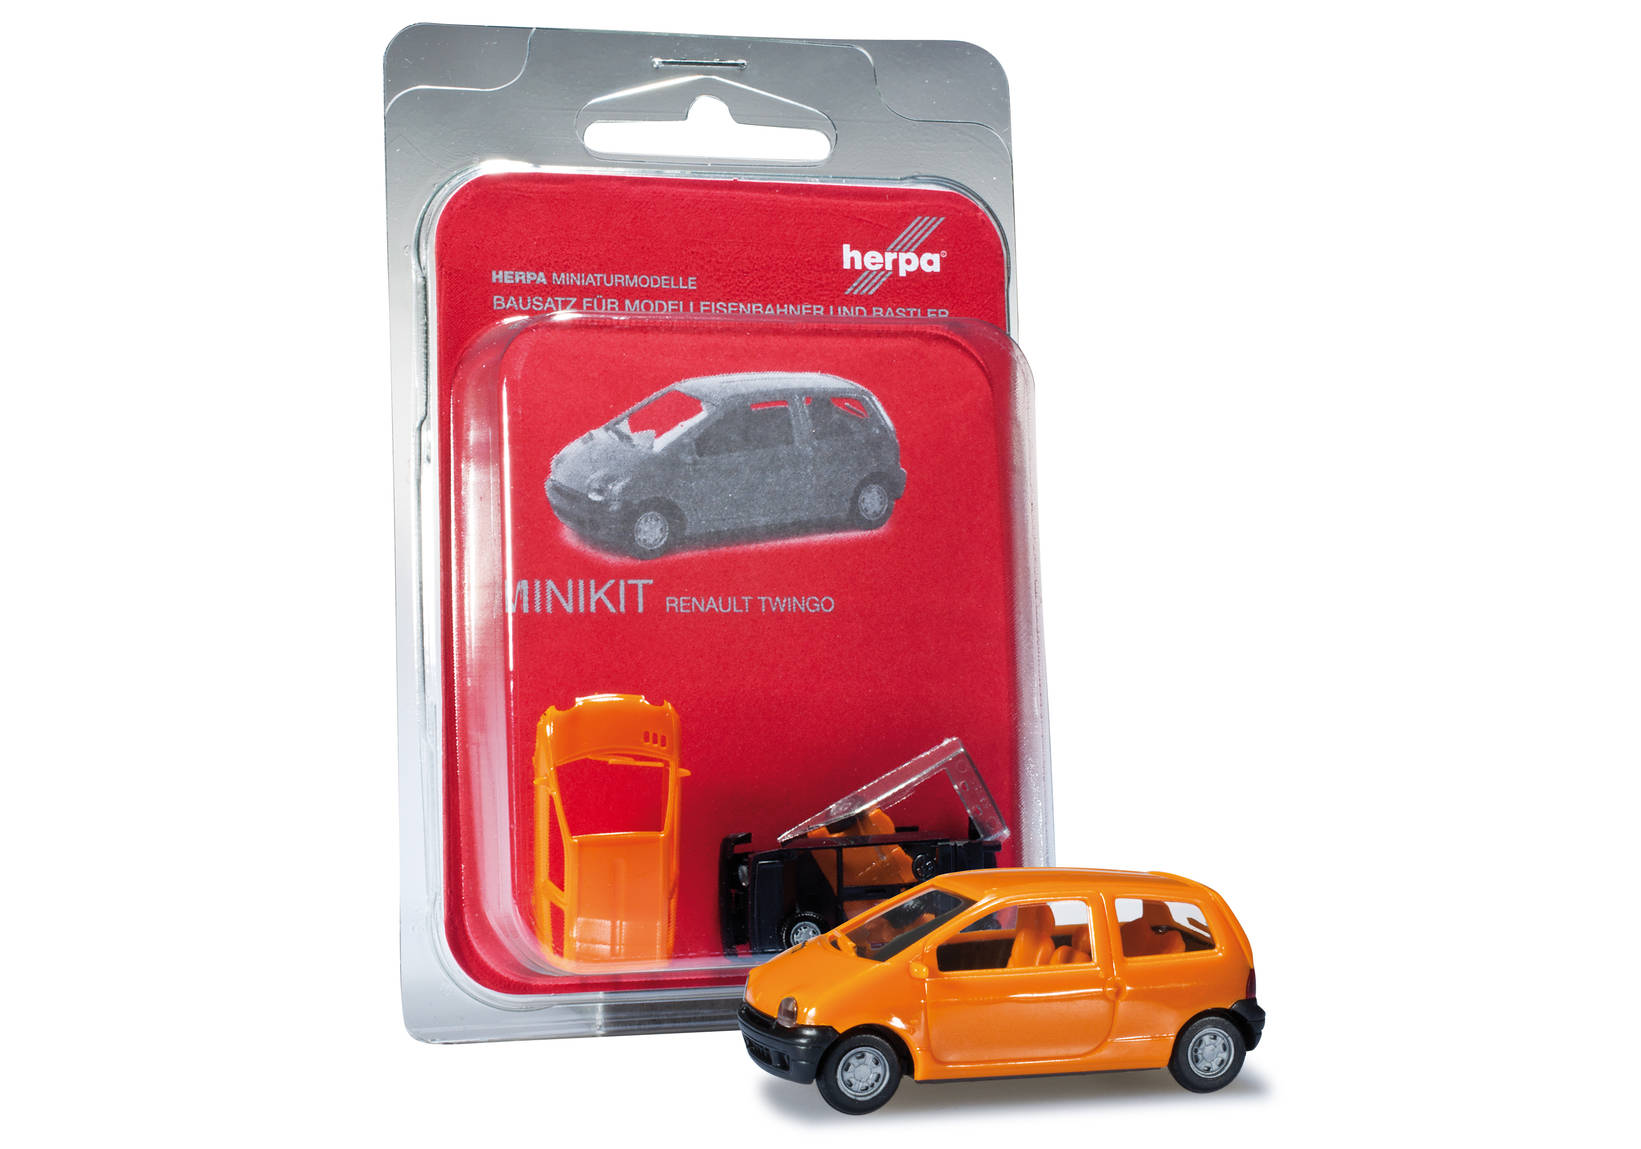 Herpa MiniKit: Renault Twingo